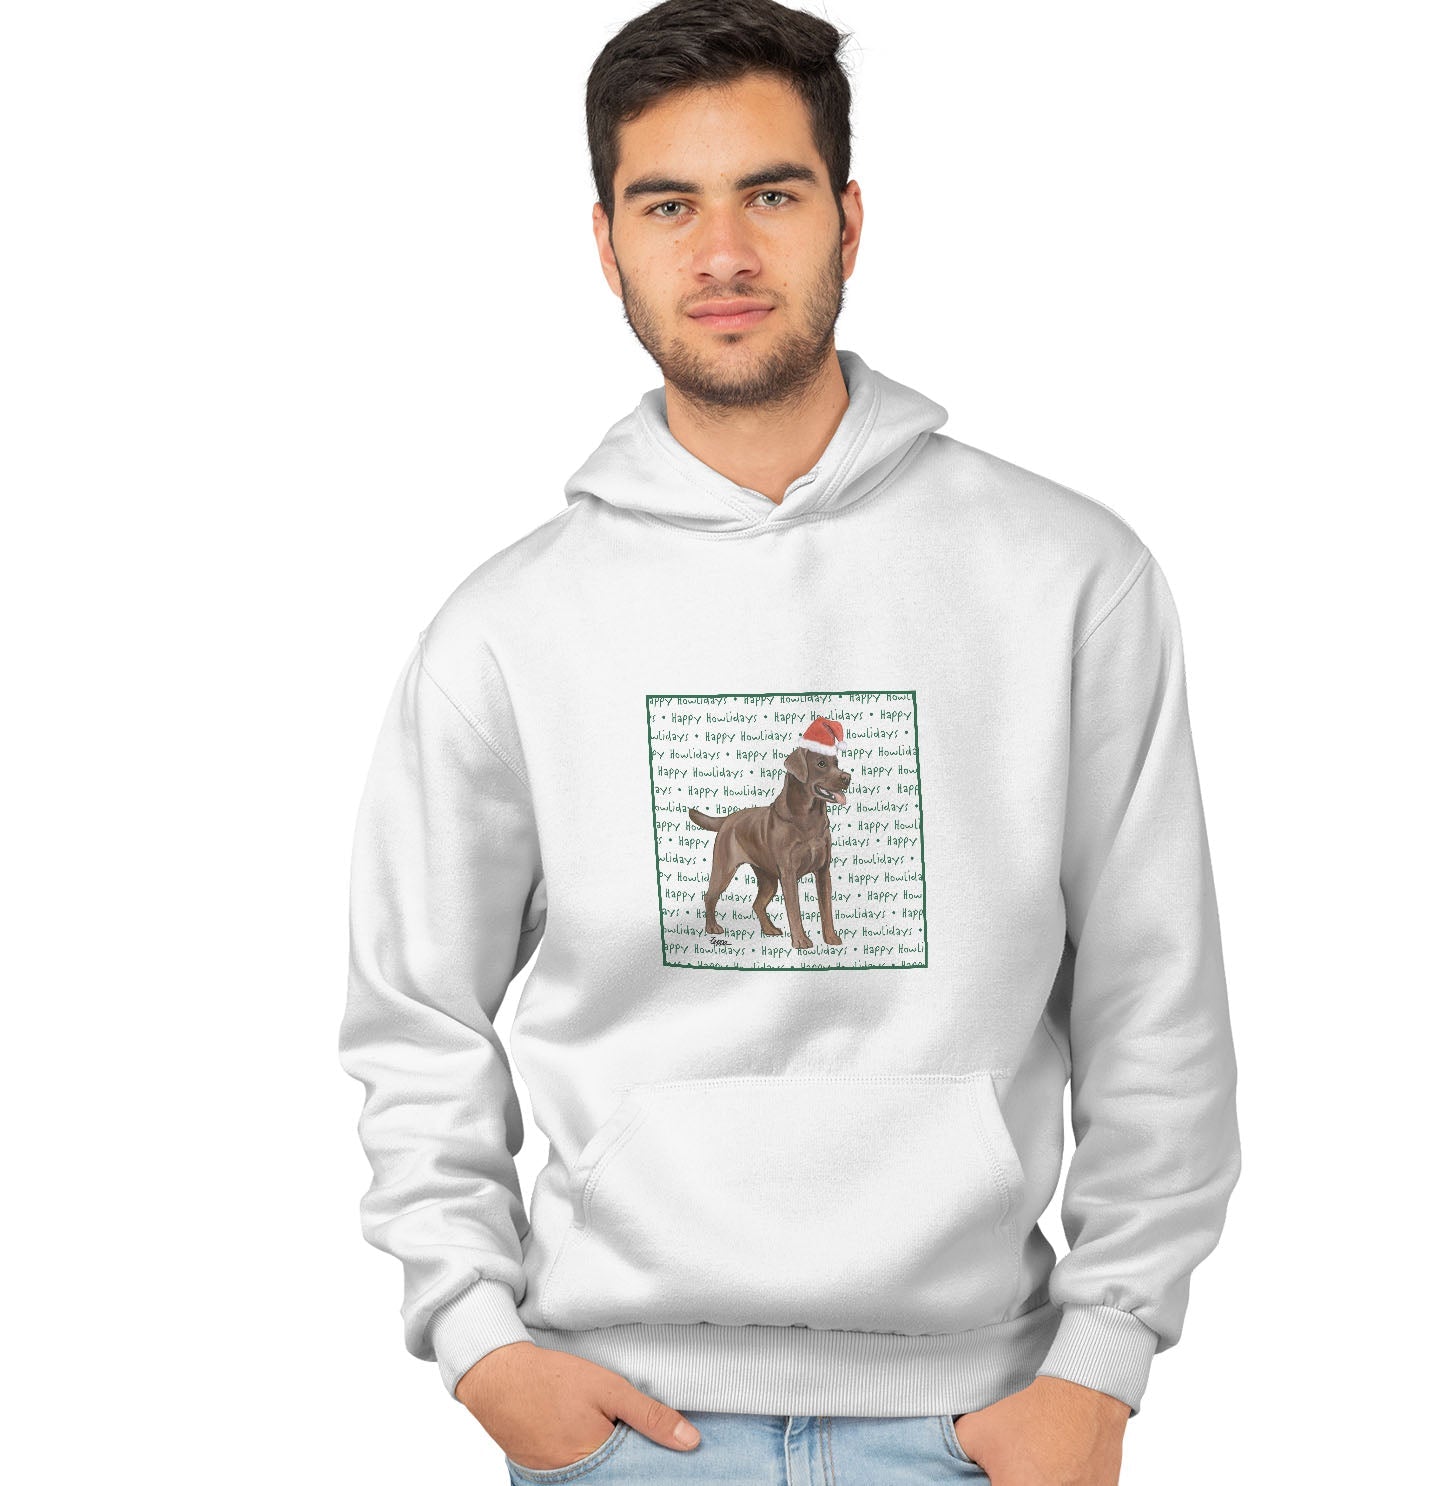 Chocolate Labrador Retriever Happy Howlidays Text - Adult Unisex Hoodie Sweatshirt